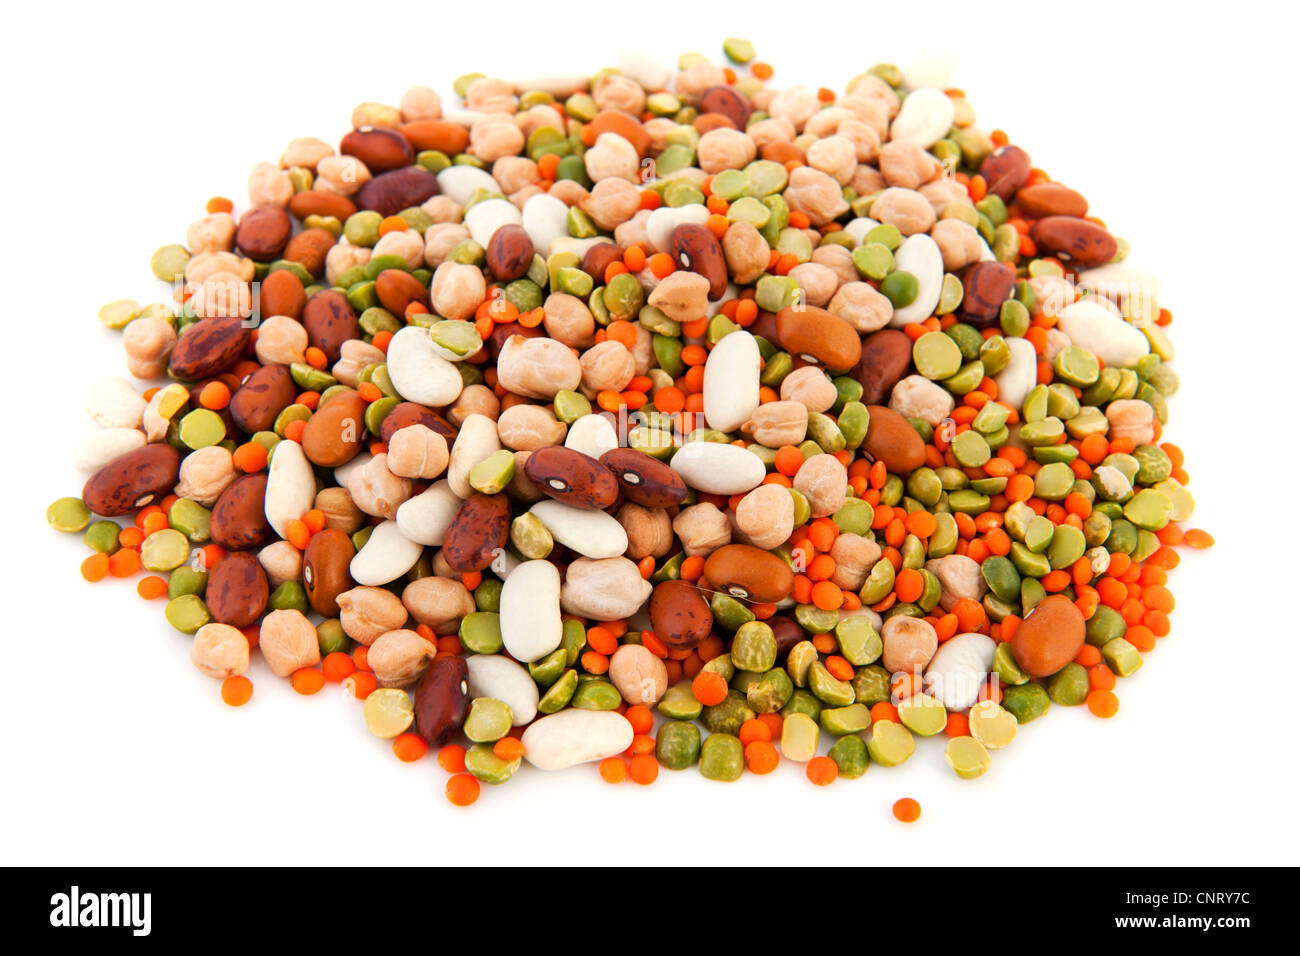 Mixed various legumes on white background Stock Photo - Alamy